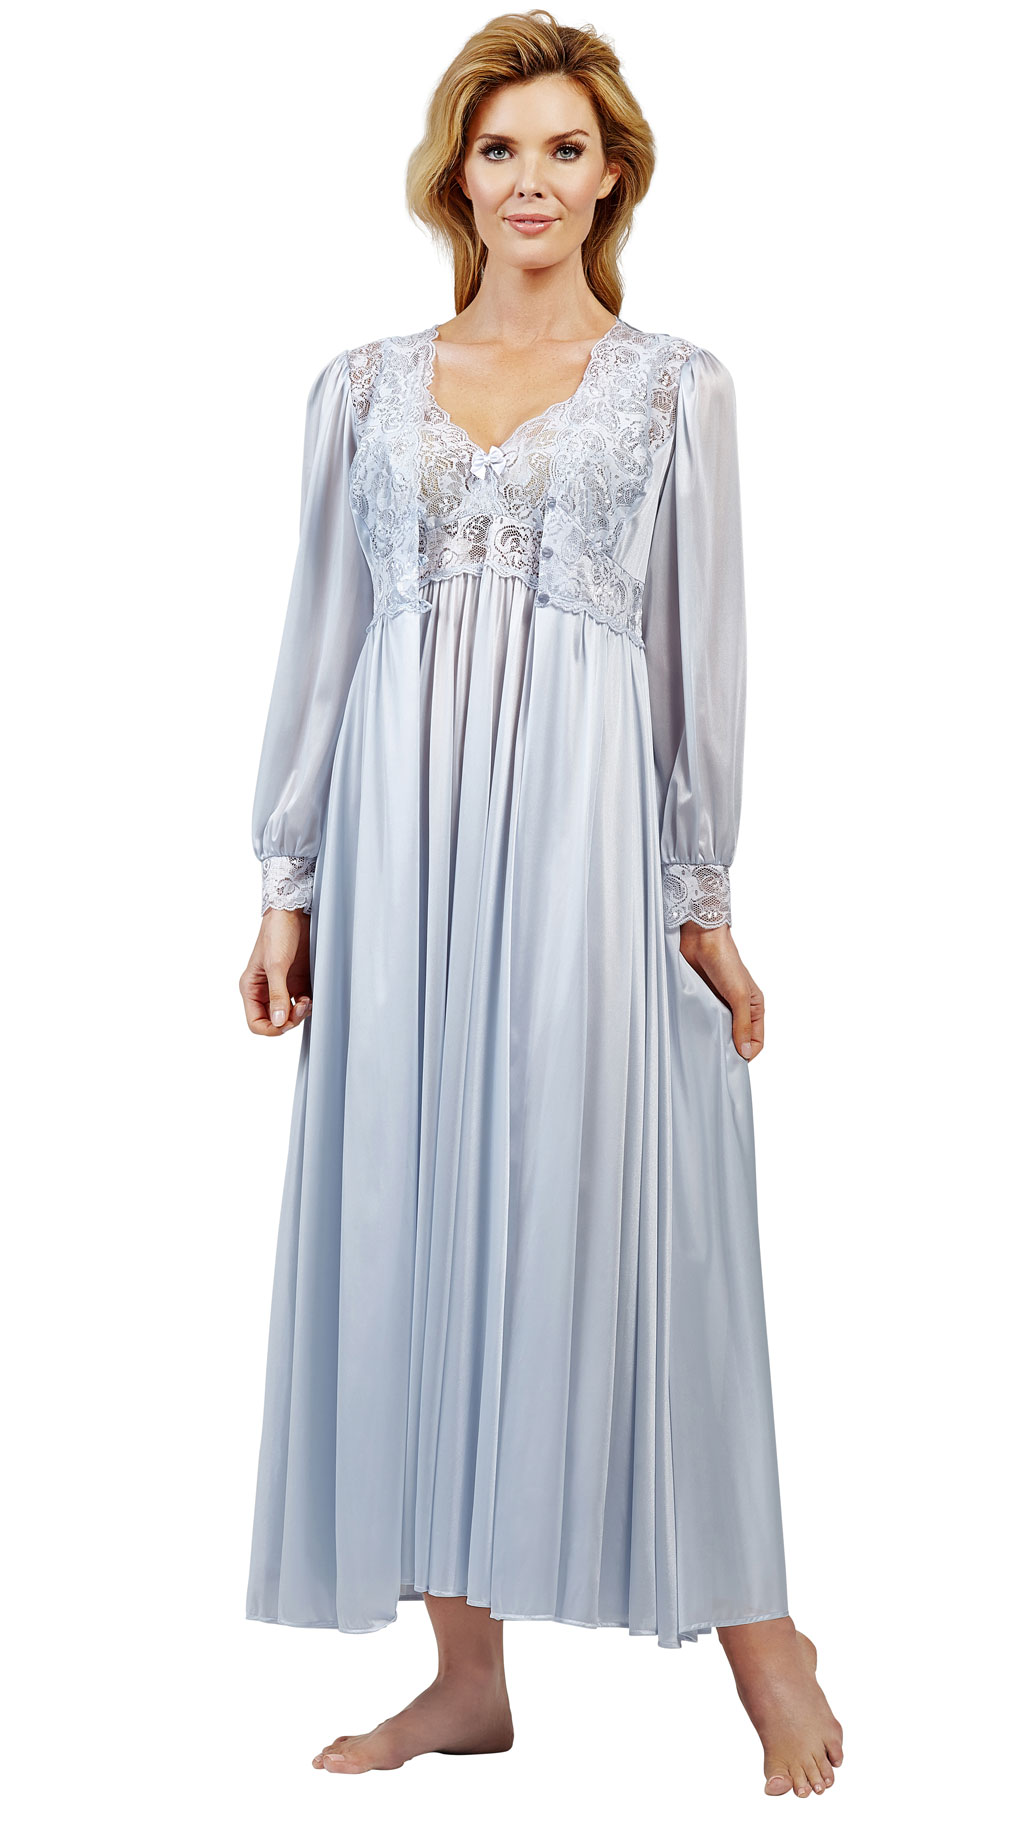 Bridal Nightgown and Robe Set Wedding Robes Lace Peignoir Bridal